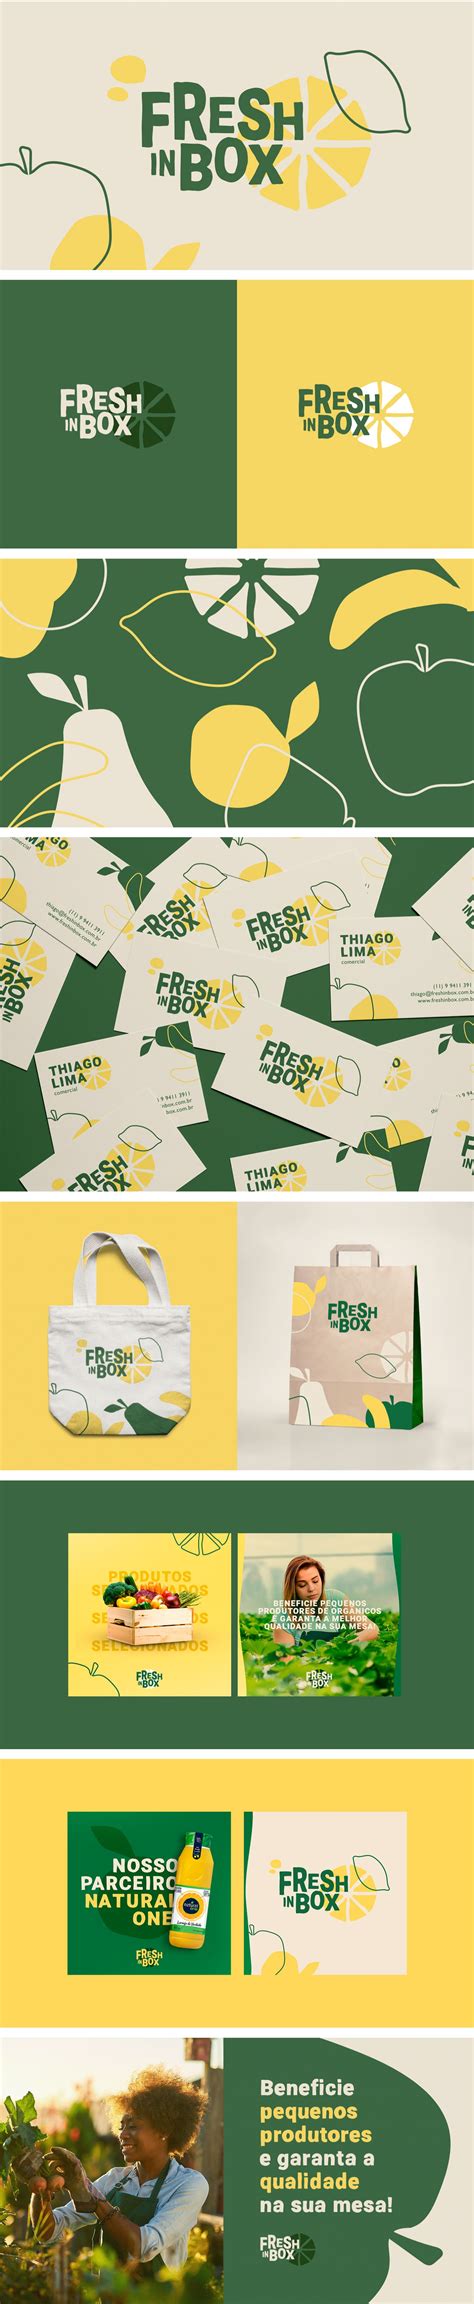 Fresh in Box | Food logo design, Small business logo design, Branding design logo